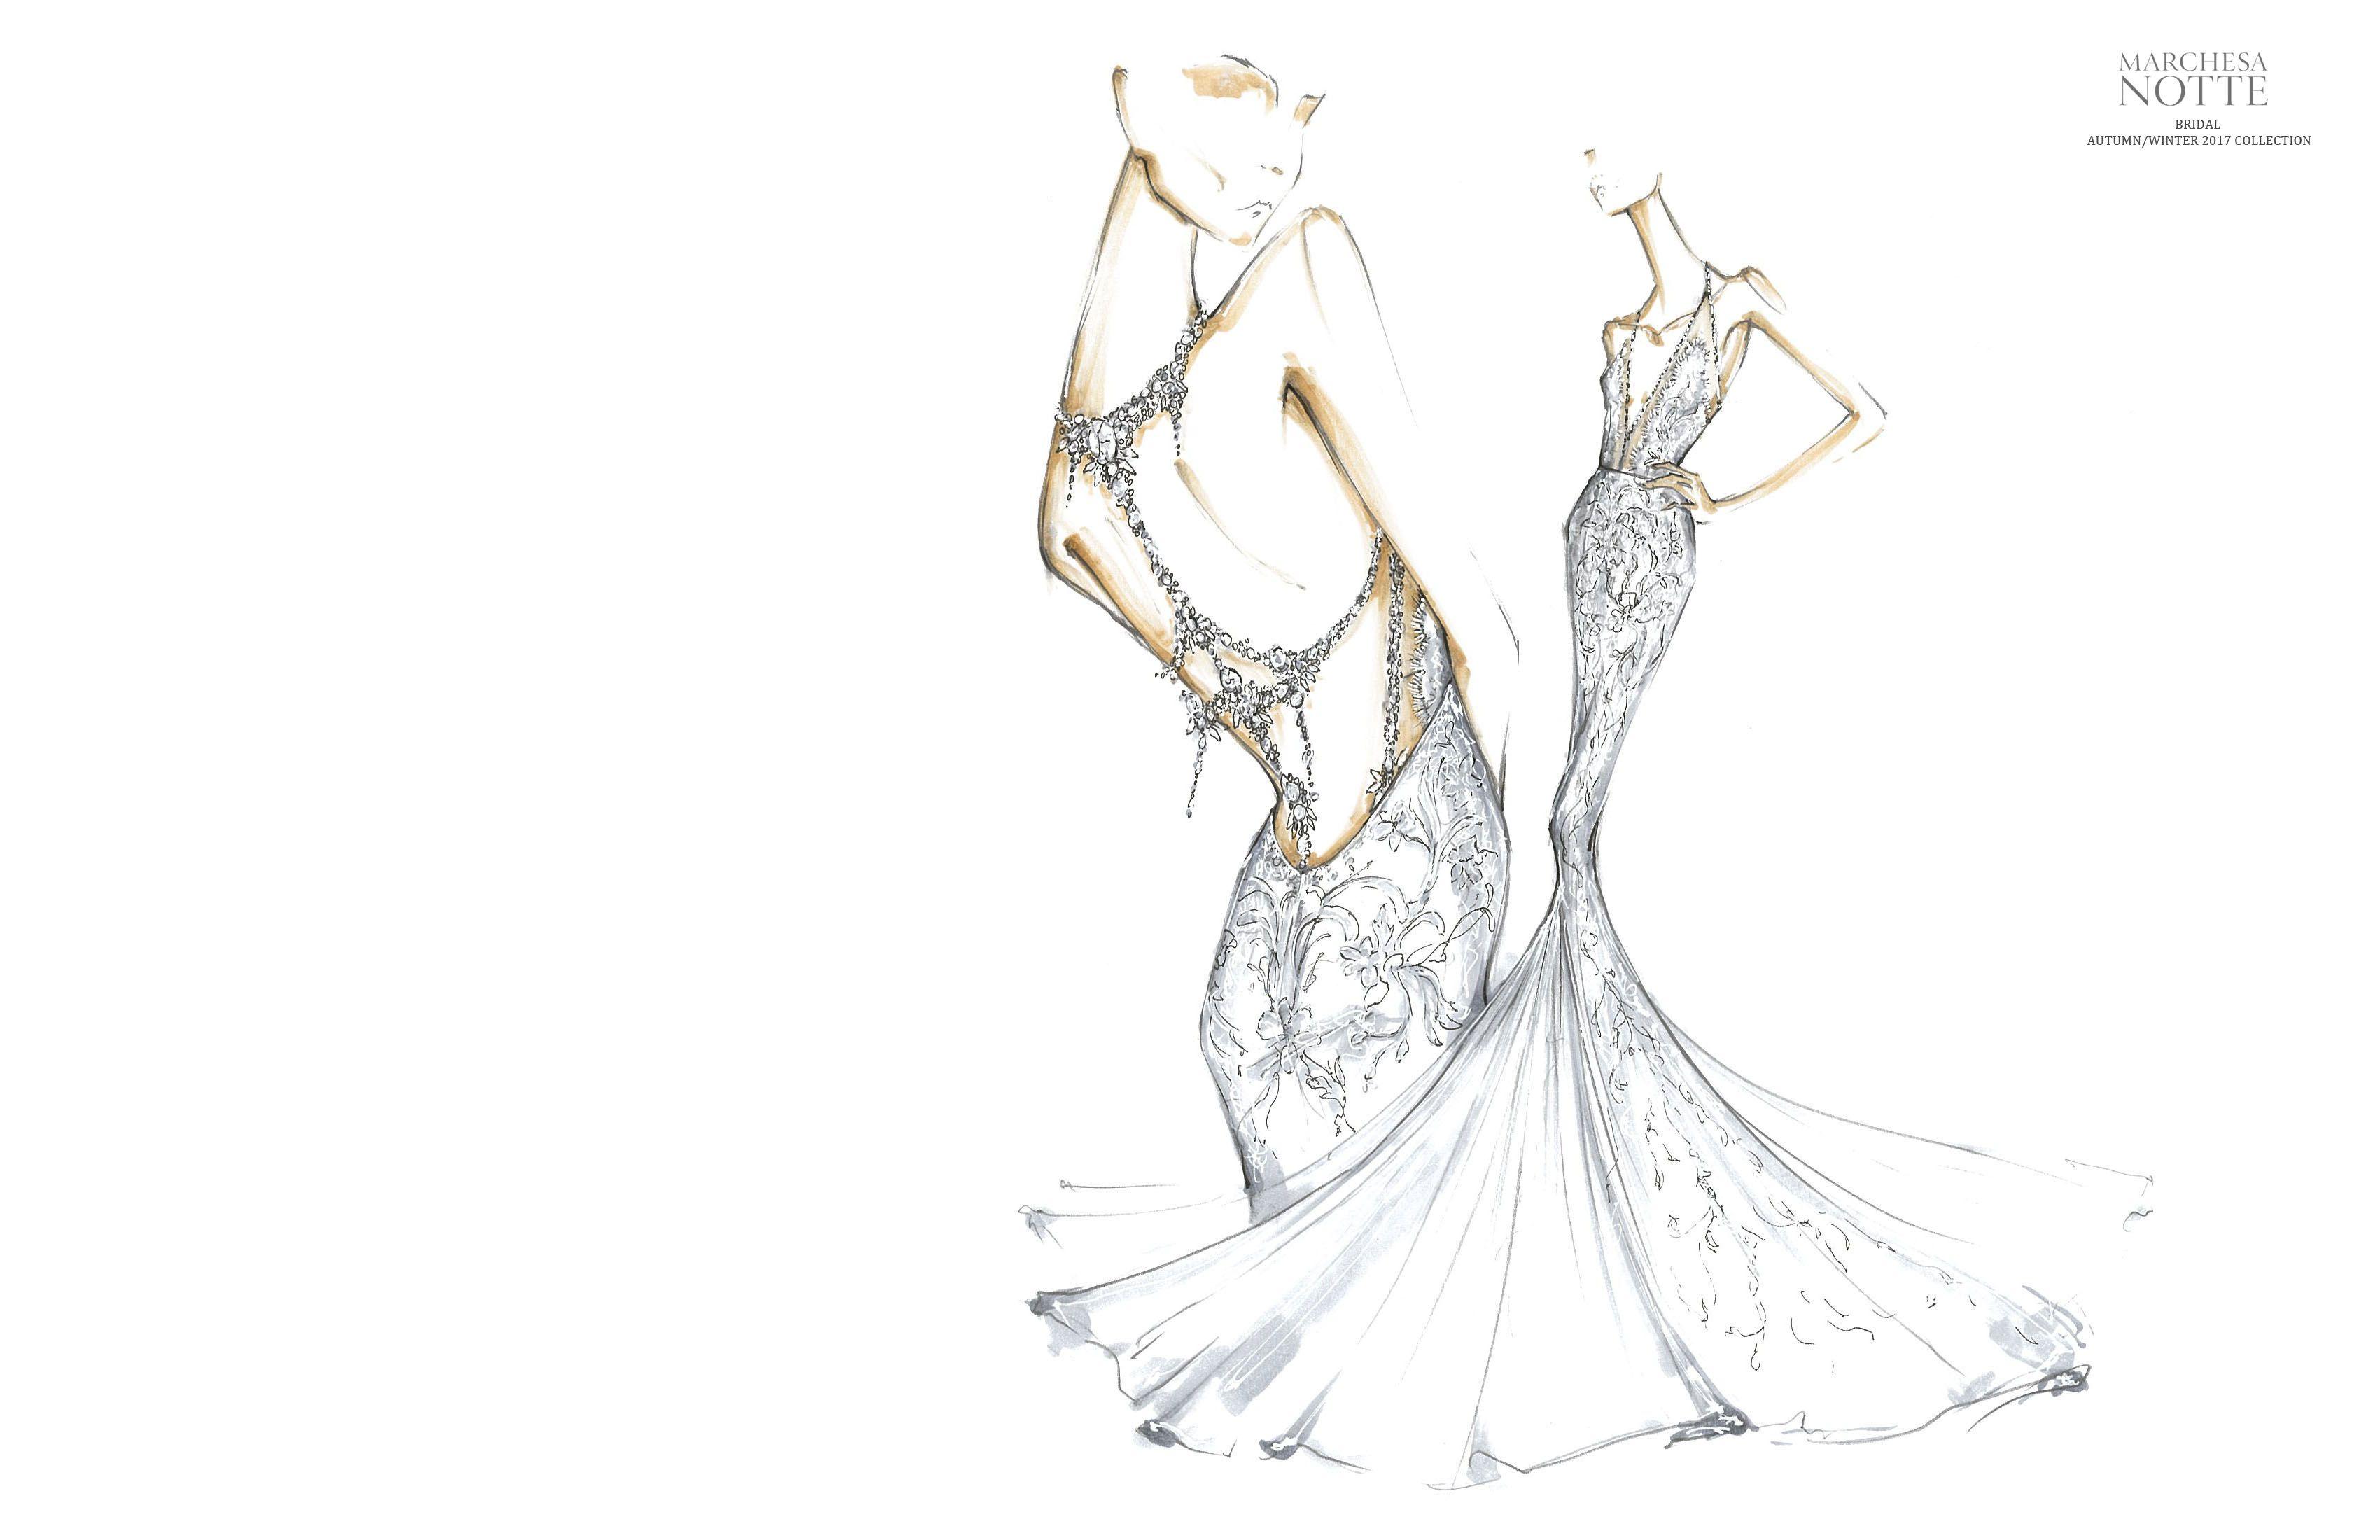 Marchesa Logo - Marchesa Notte Unveils First Bridal Collection